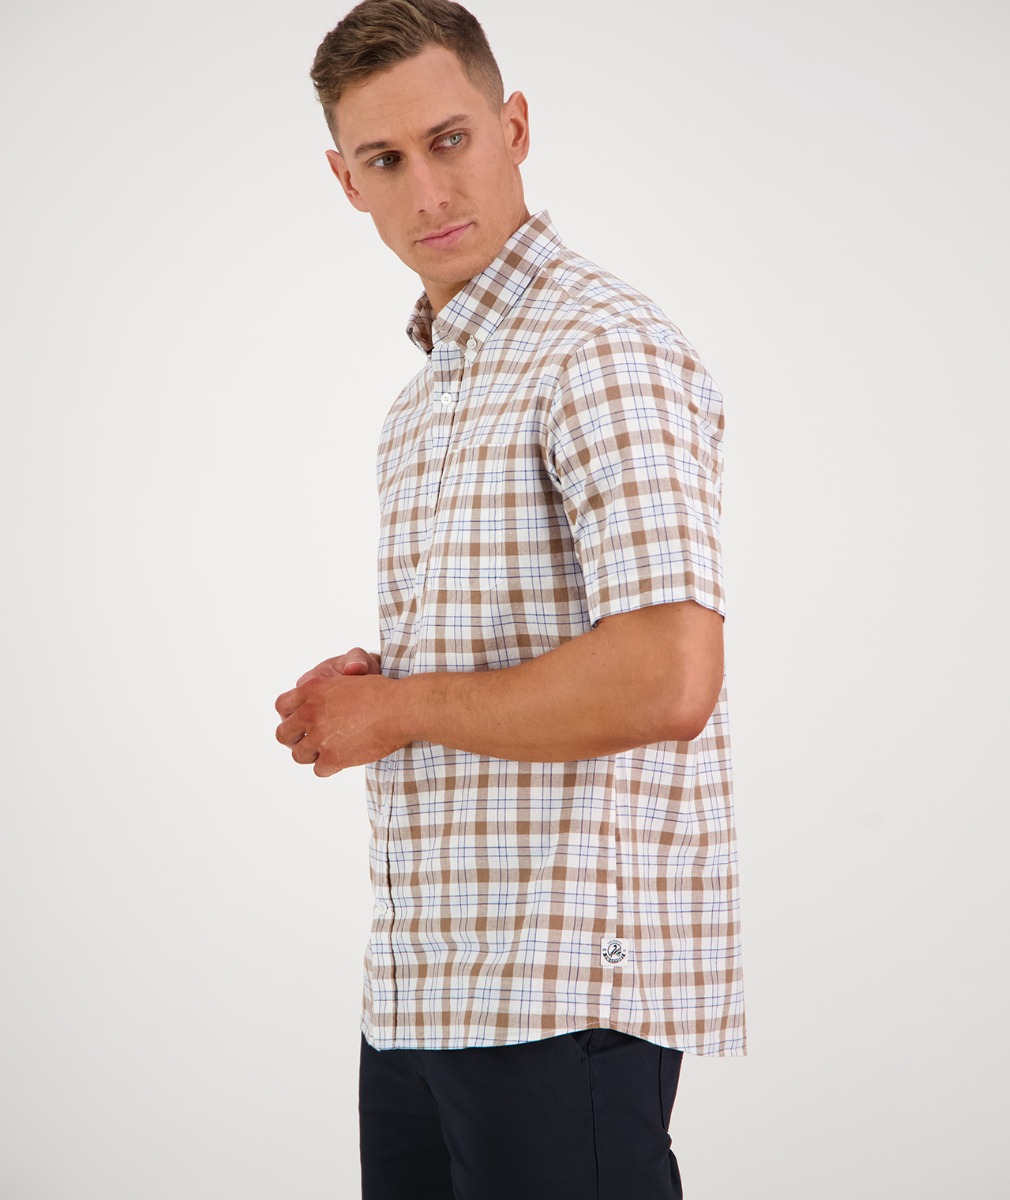 Men's River Oaks Short Sleeve Shirt